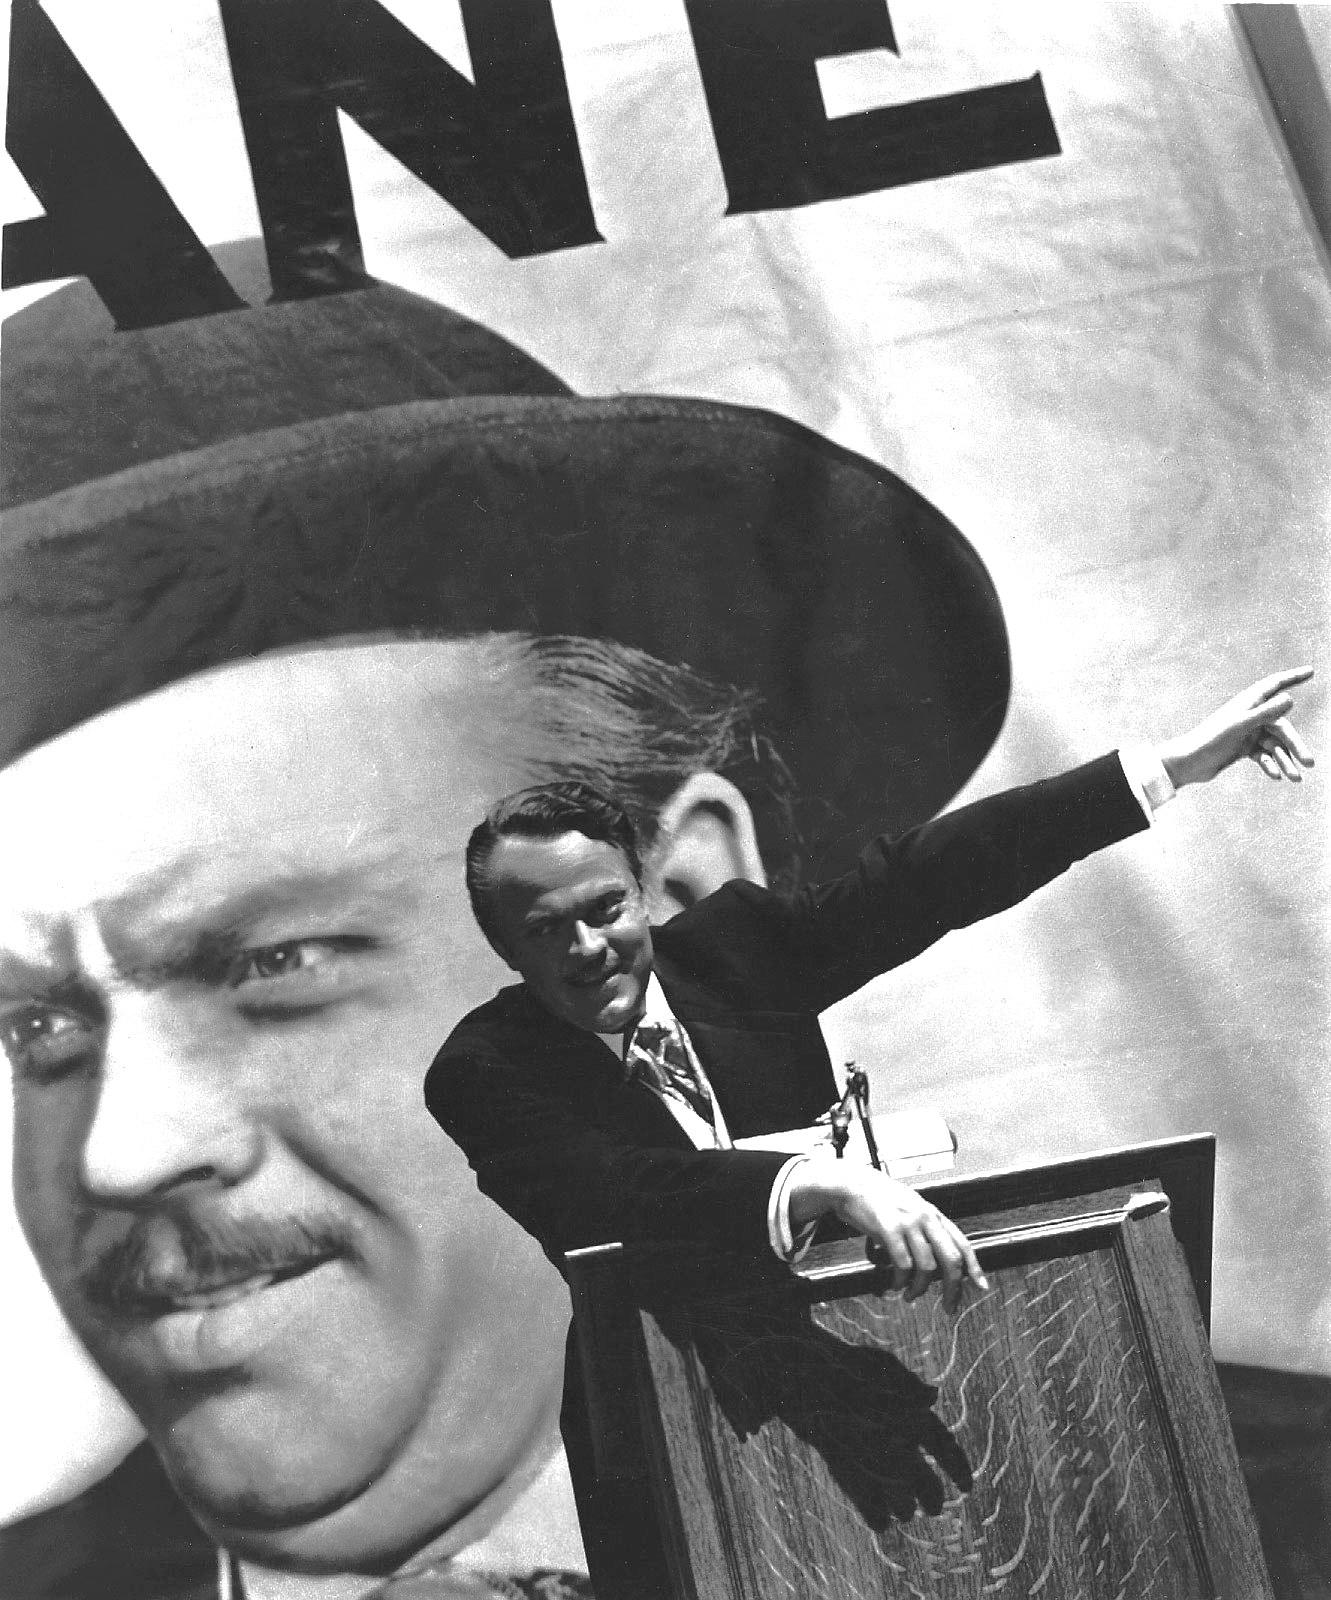 Citizen Kane Wallpaper High Quality